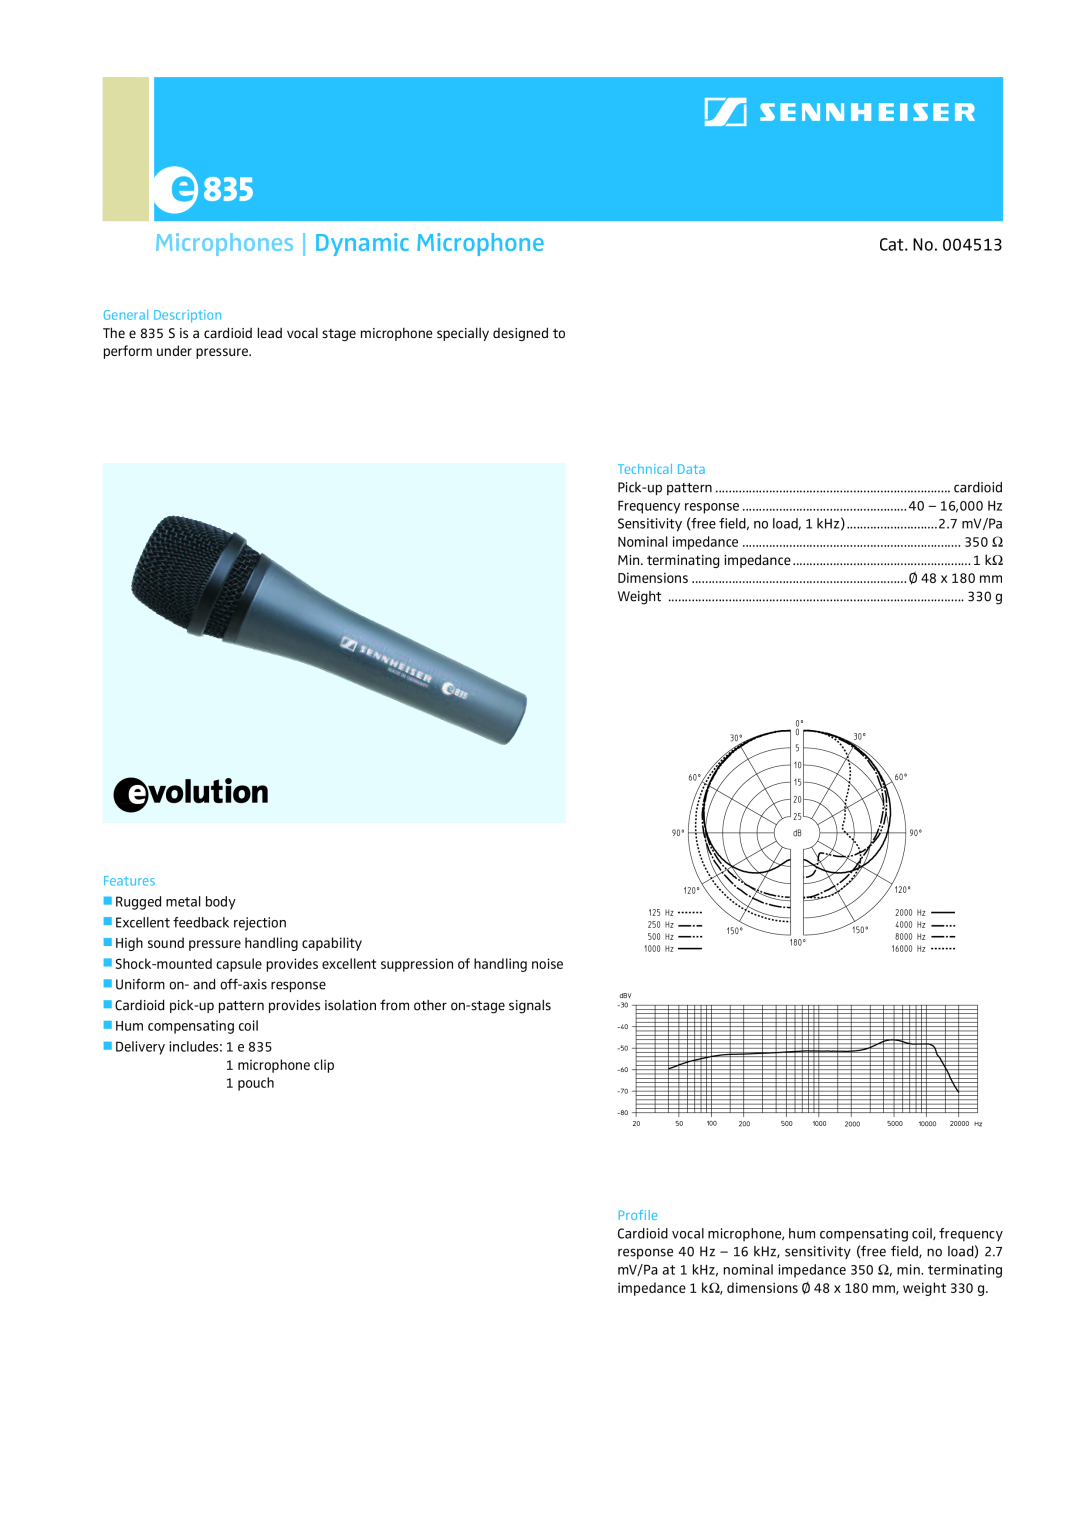 Sennheiser E835 dimensions Microphones Dynamic Microphone, Cat. No, General Description, Technical Data, Features, Profile 